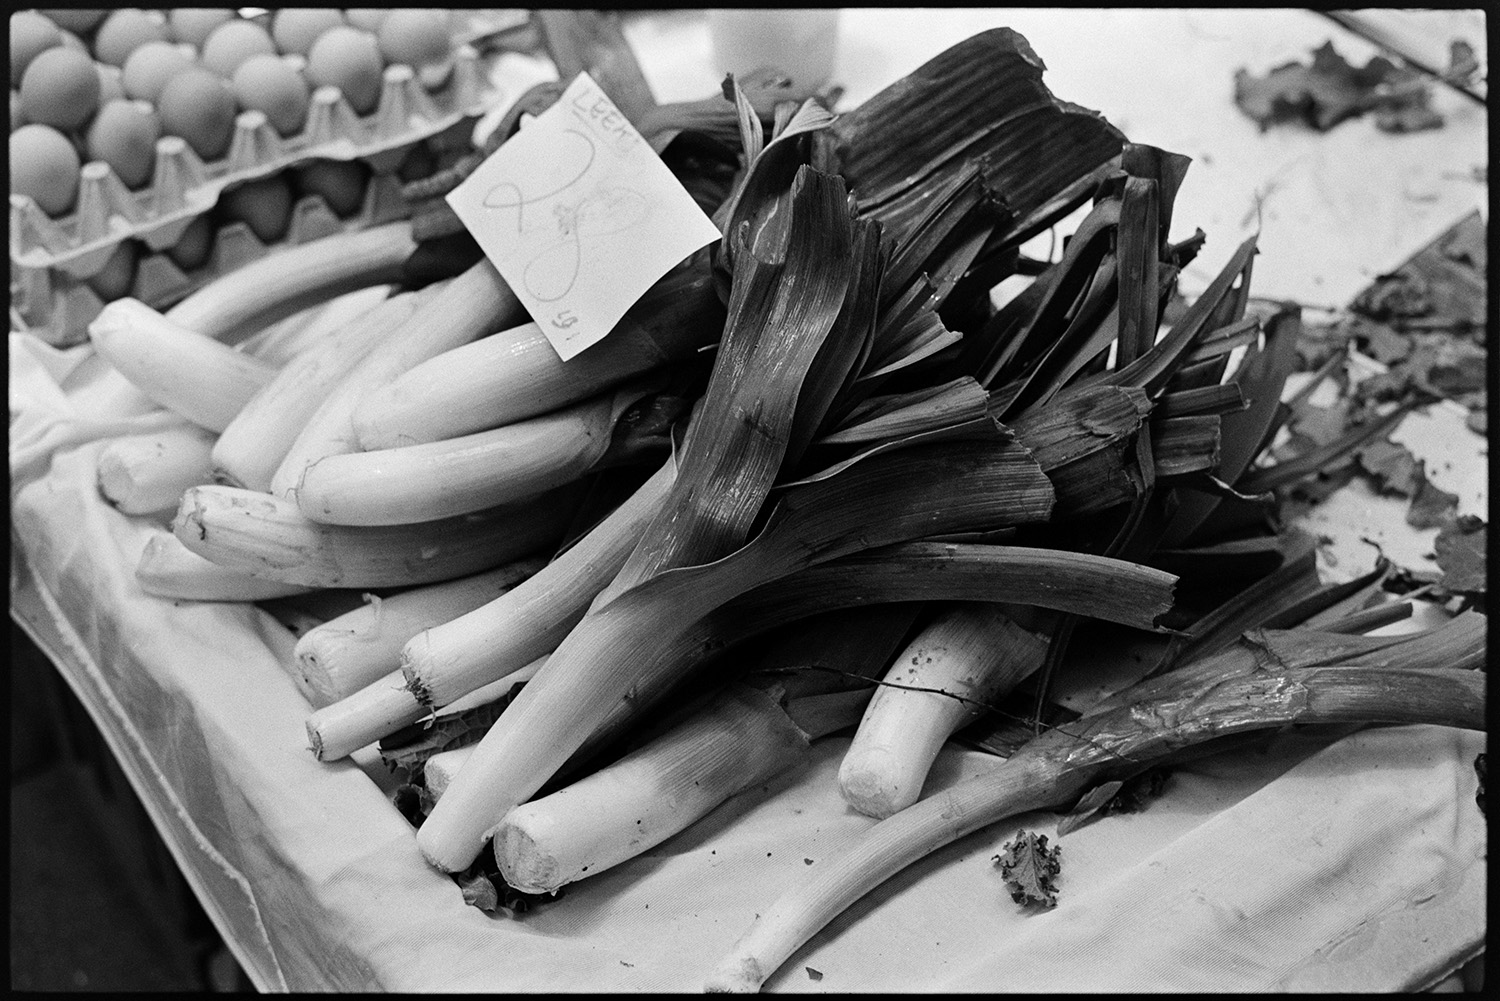 Pannier market, vegetables on display, cabbages, leeks, basket.
[A pile of leeks for sale, alongside trays of eggs, at Barnstaple Pannier Market. A price tag is displayed on the leeks.]